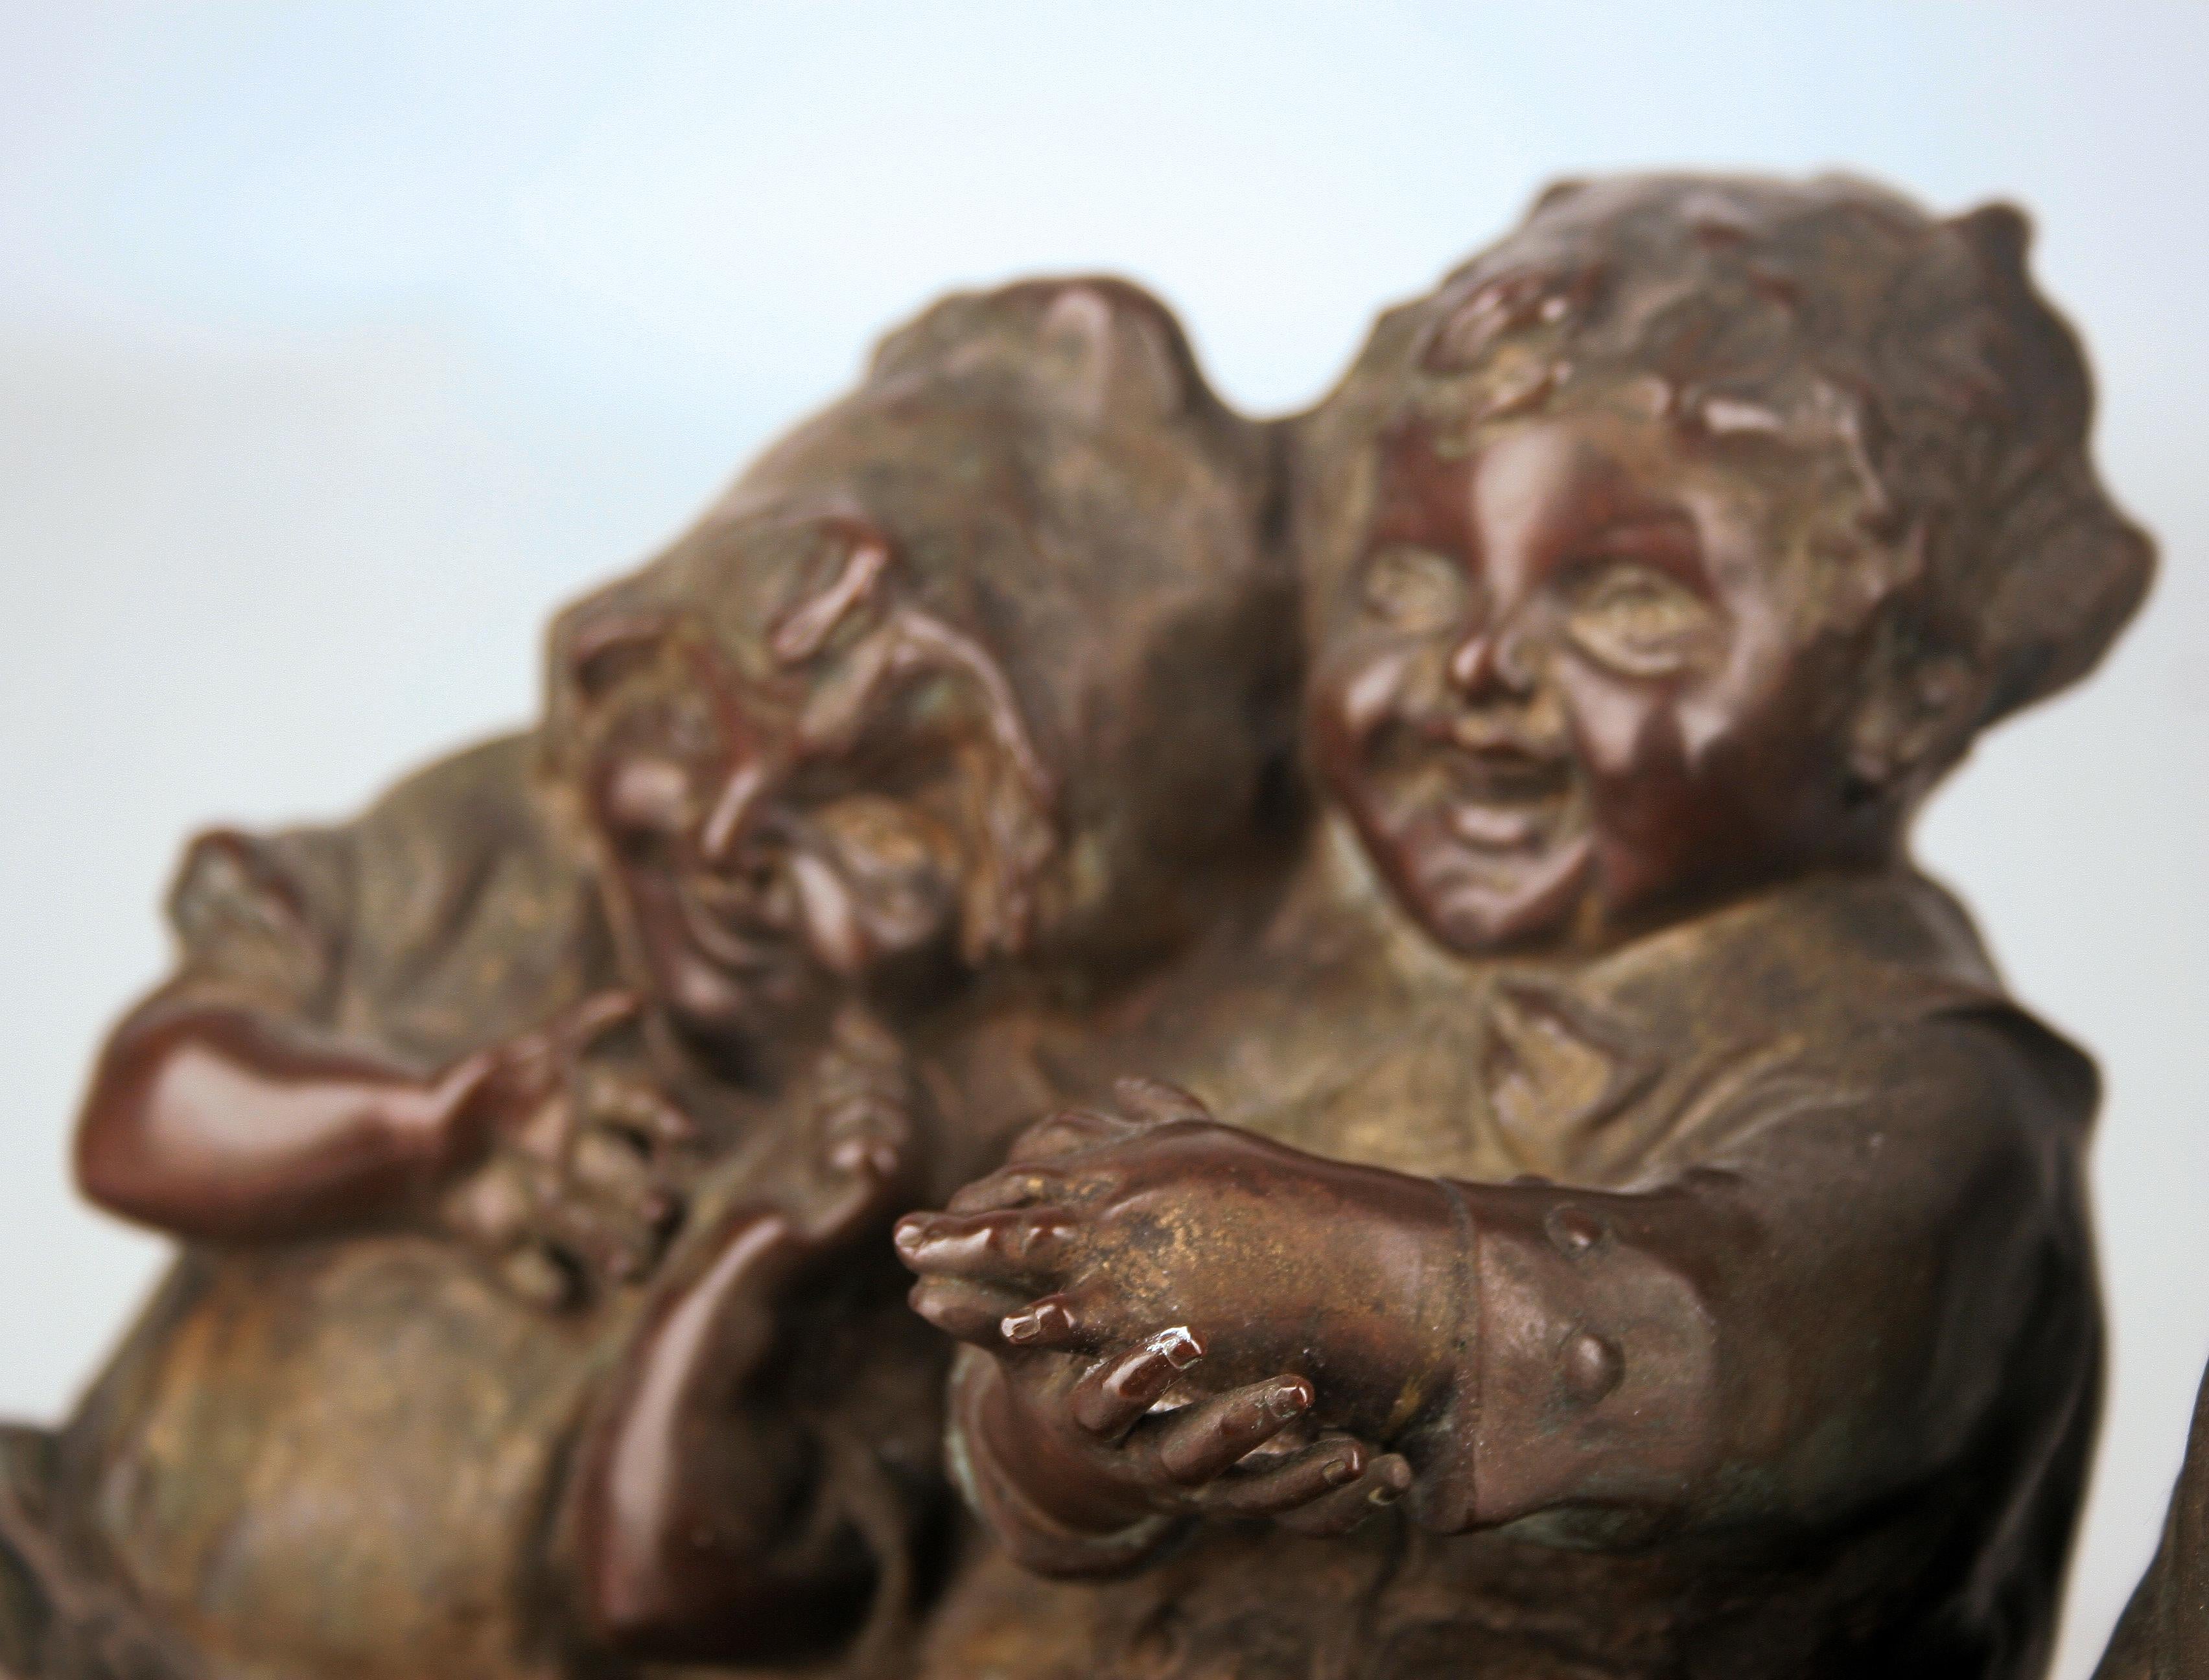 Copper Juan Clara's 'Watching Something': Spanish Bronze Sculpture of Children on Bench For Sale